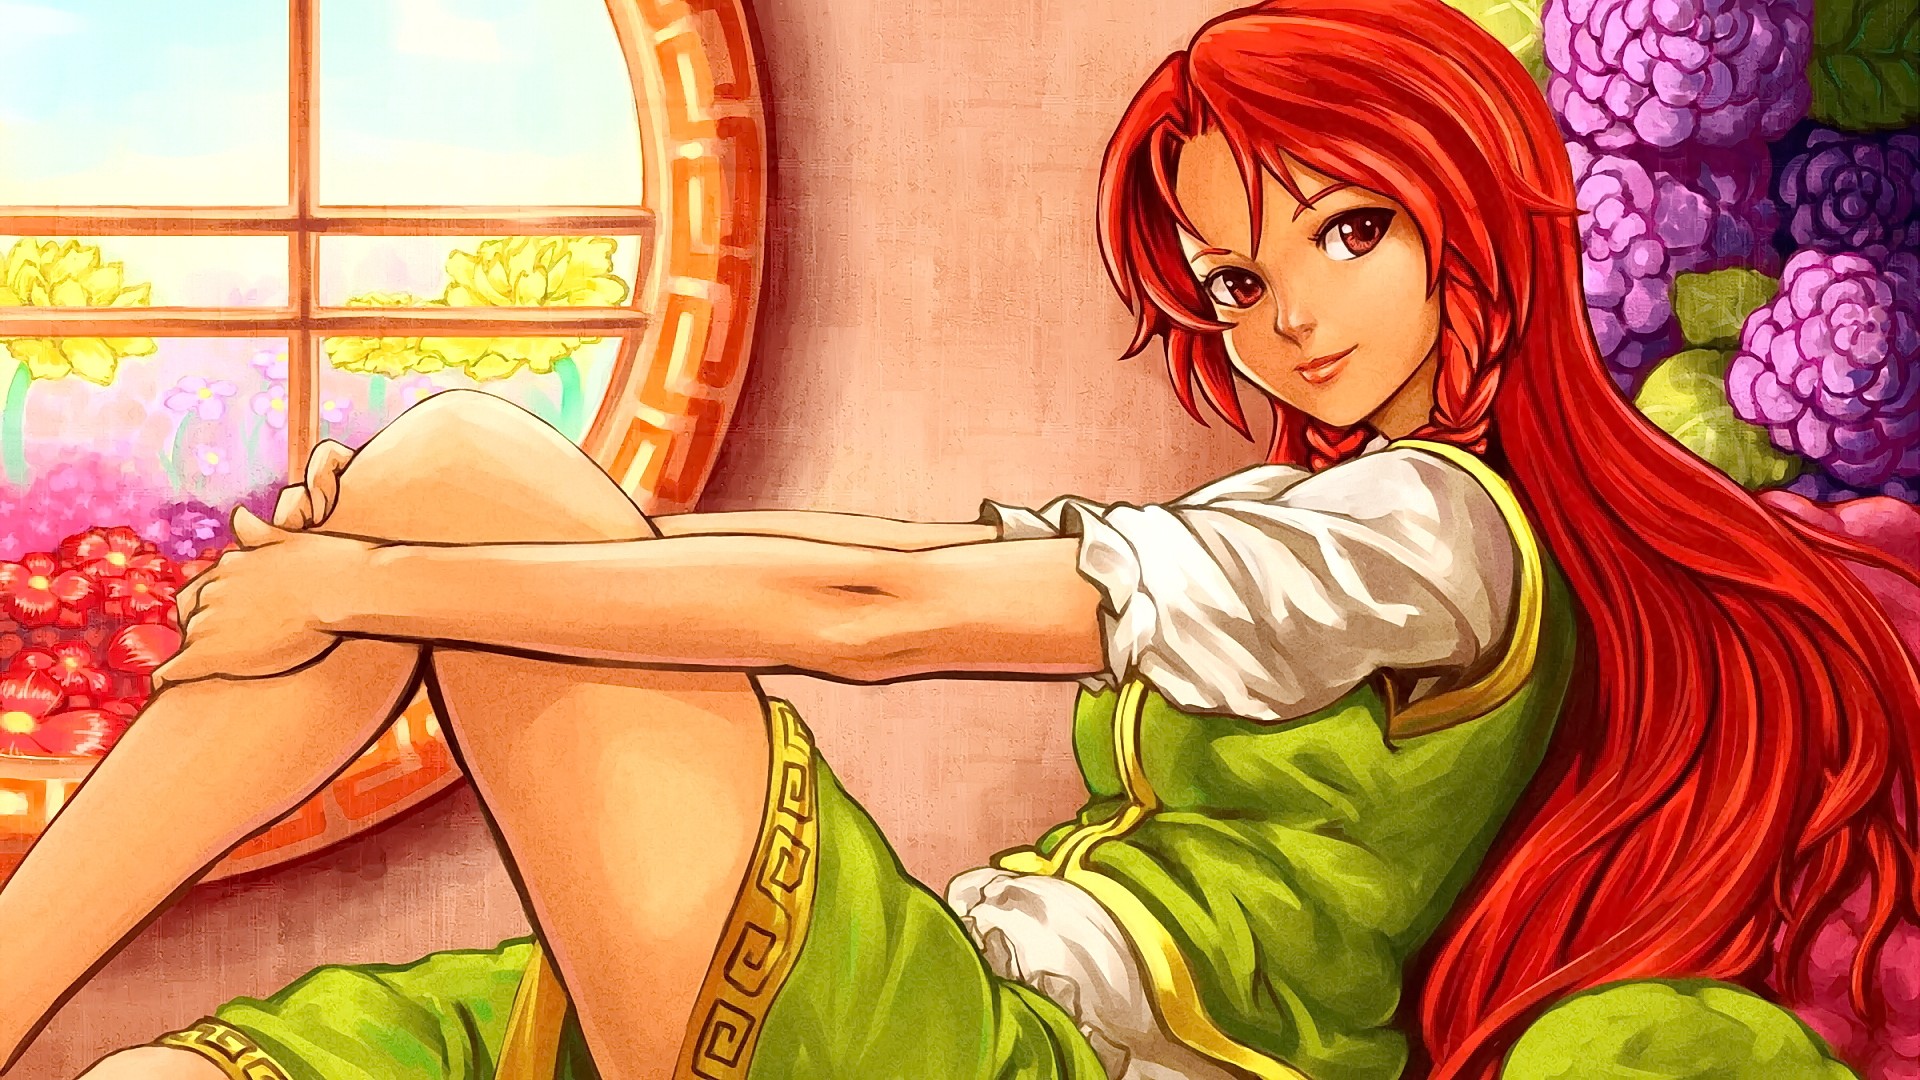 Anime 1920x1080 anime anime girls redhead long hair looking at viewer smiling fantasy art fantasy girl Hong Meiling